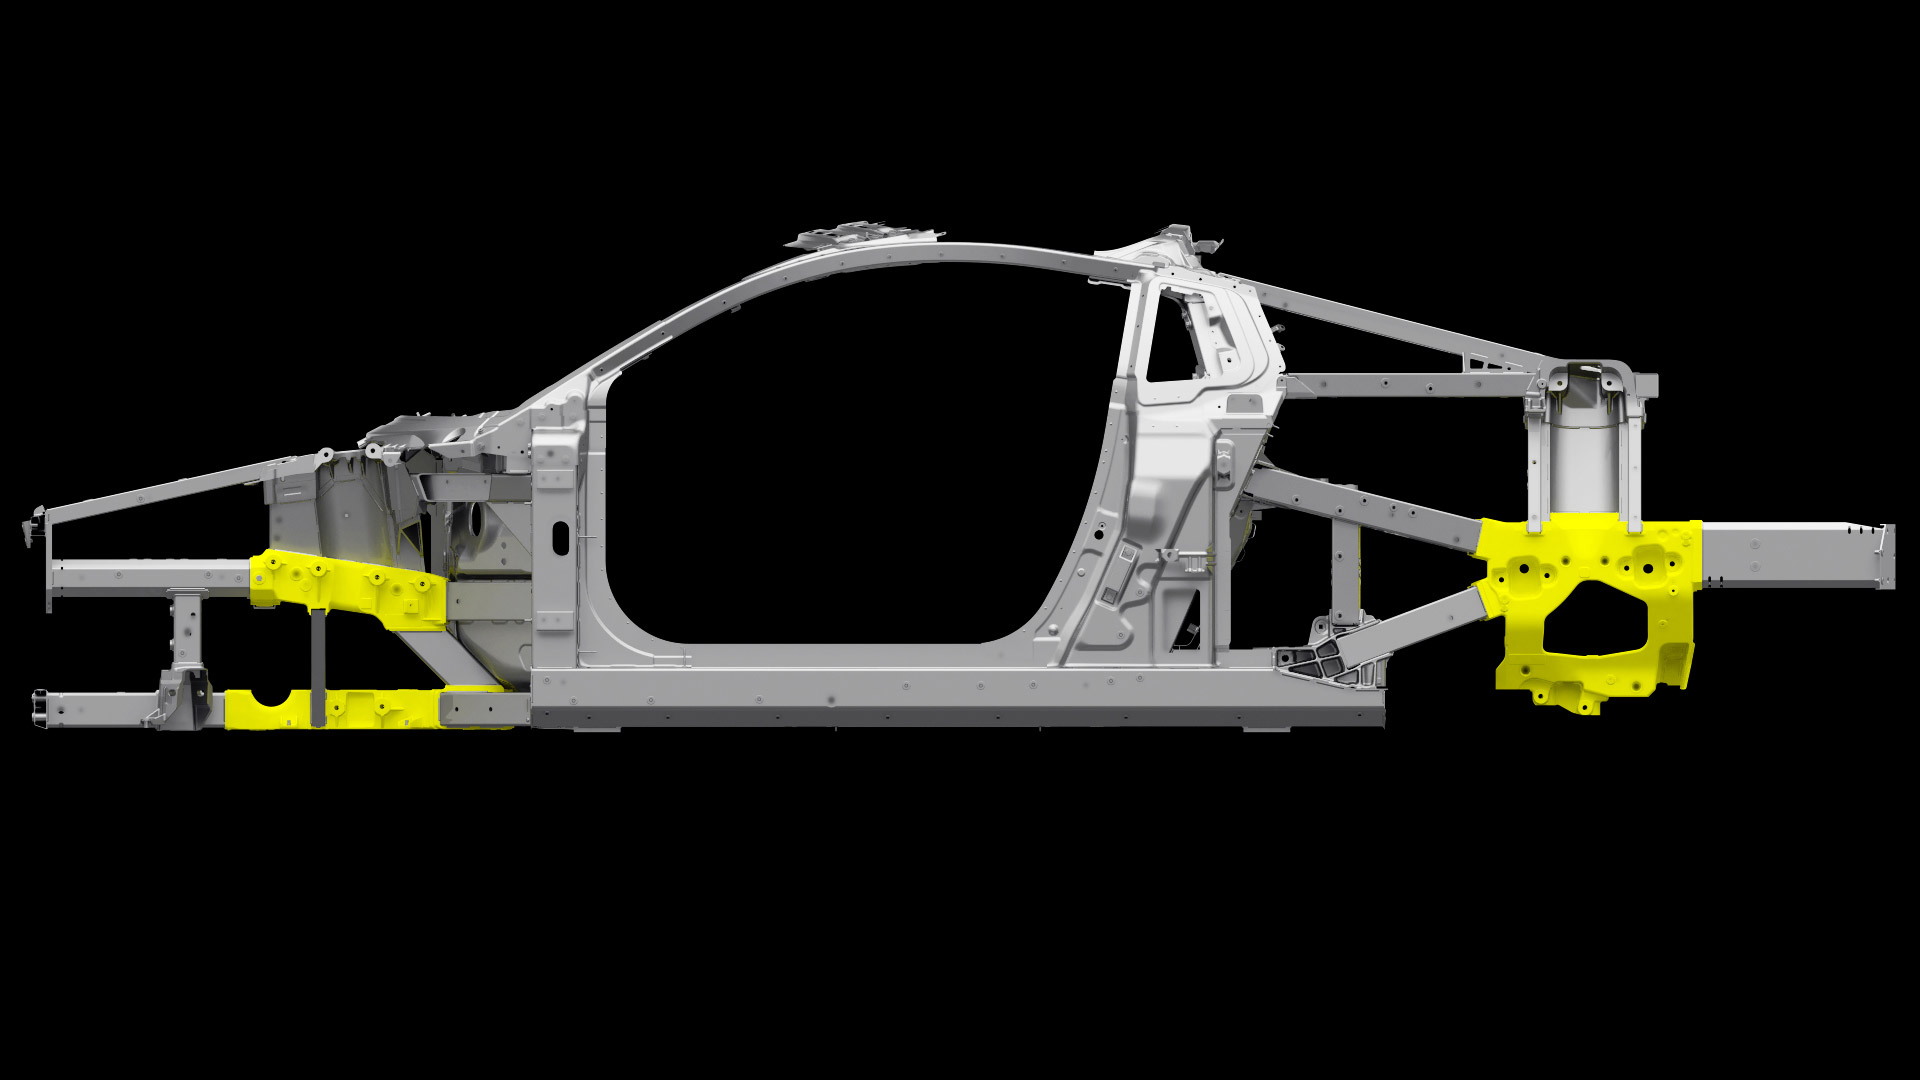 2017 Acura NSX internal view